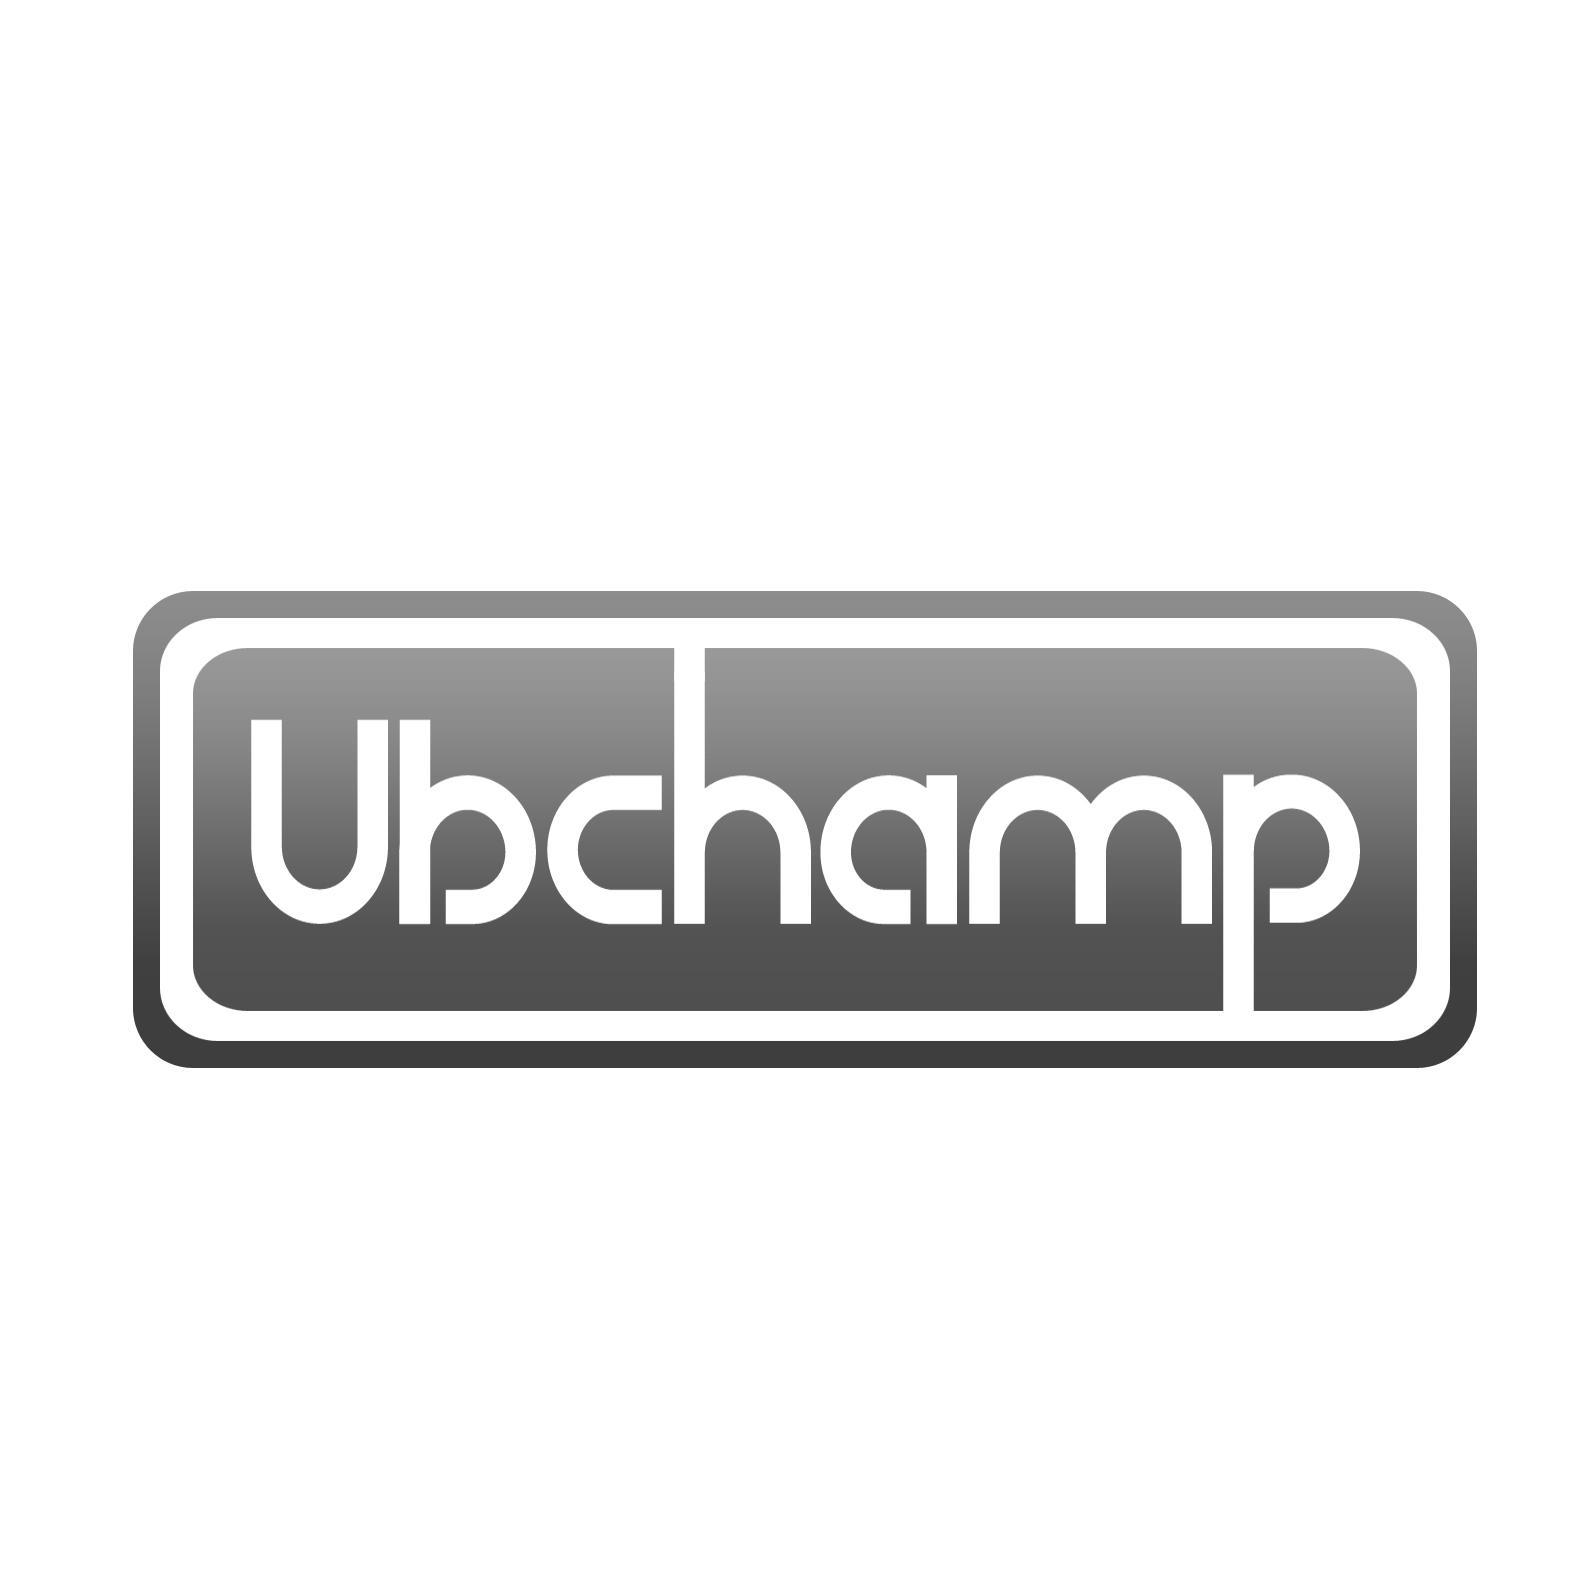 03类-日化用品UBCHAMP商标转让